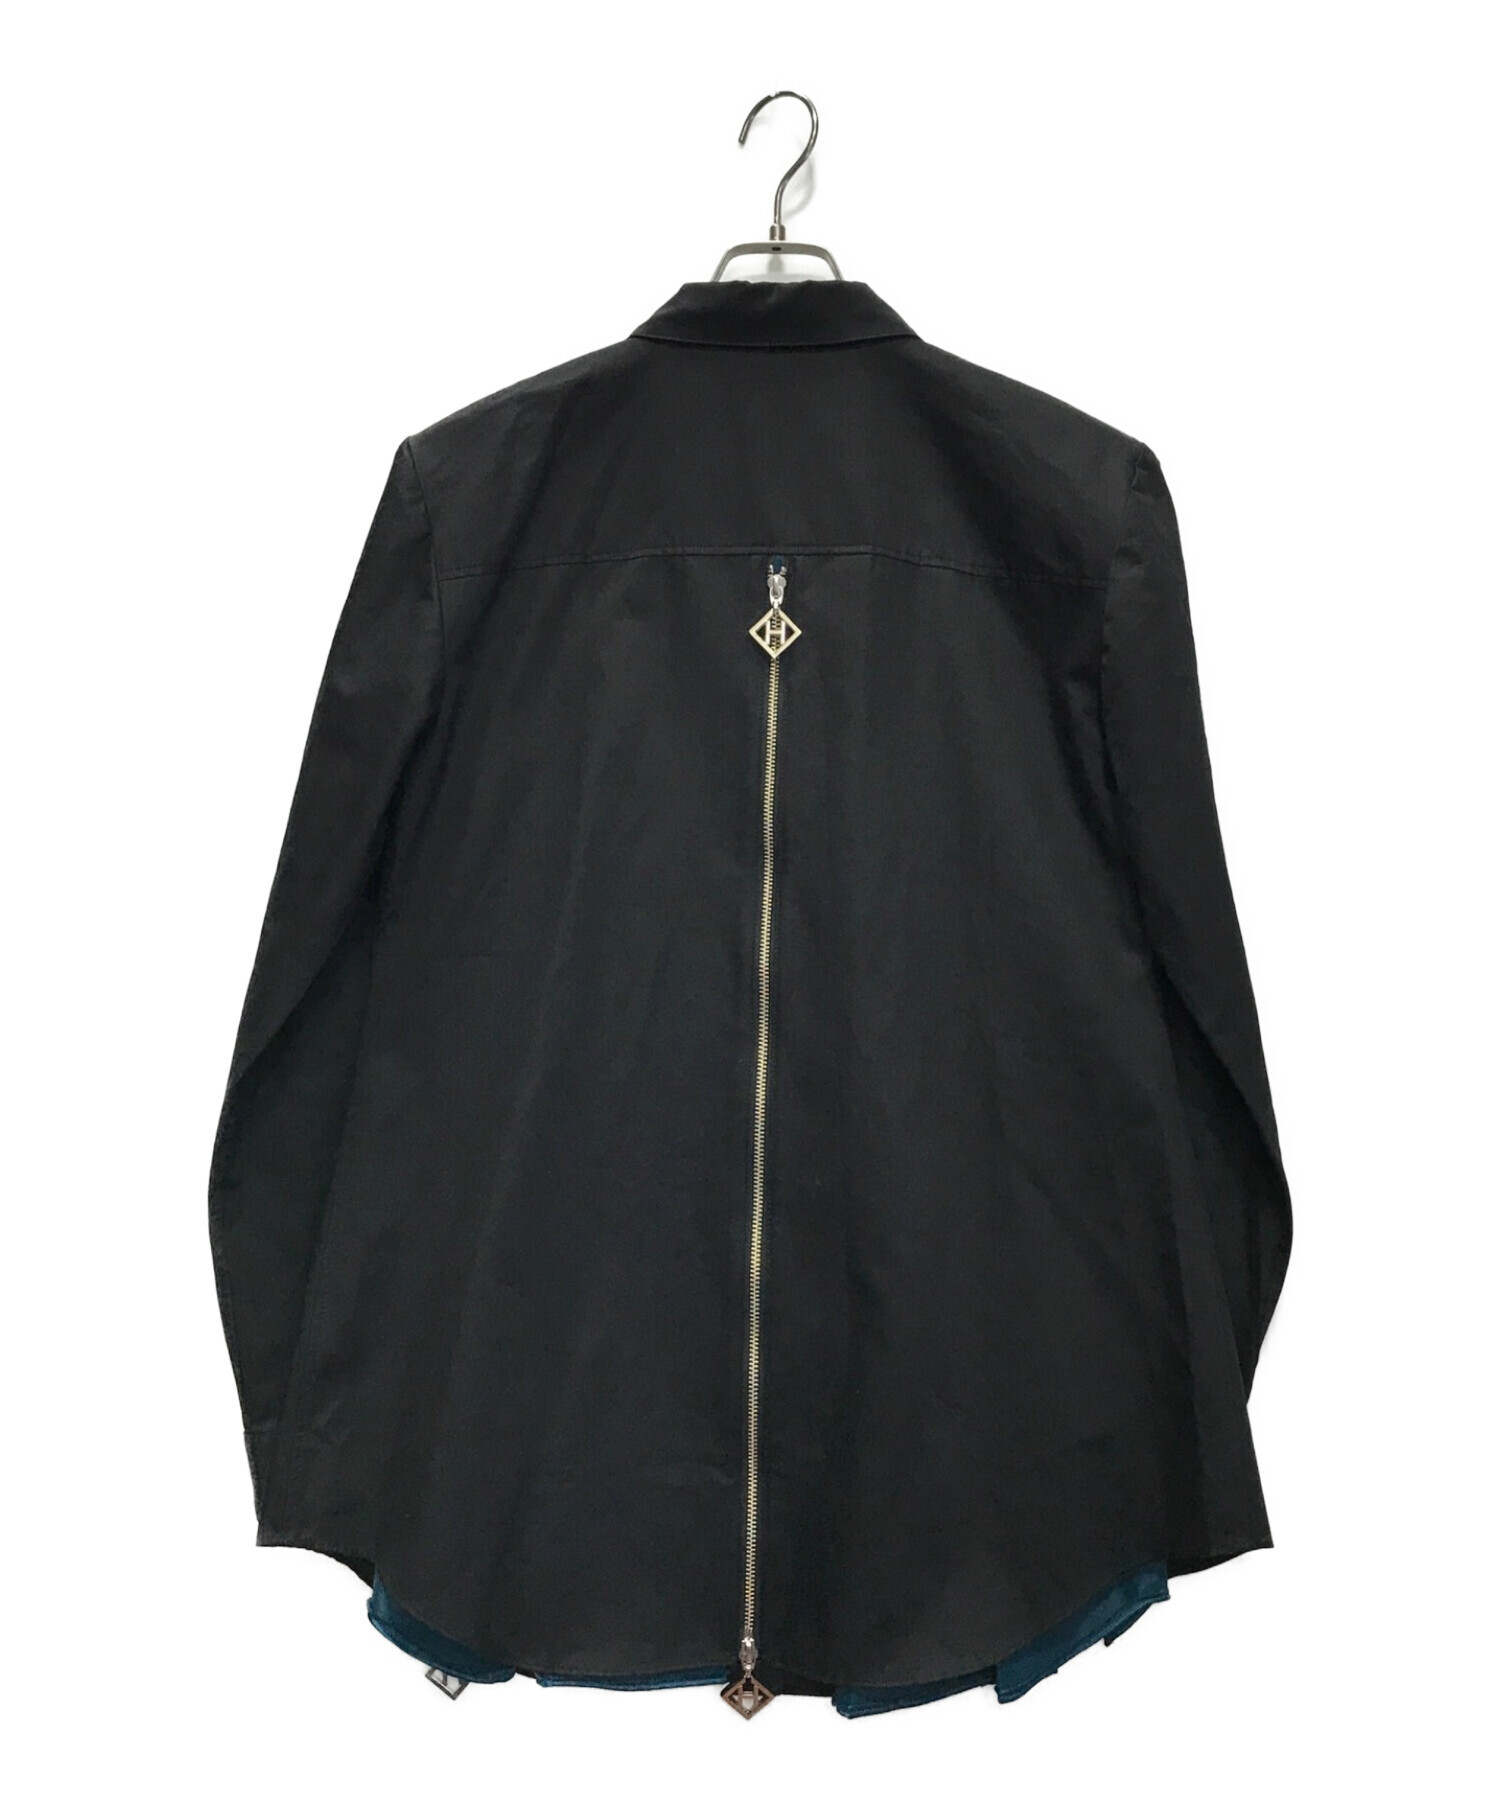 hazama 絶対不可侵のシャツ ブラック ハザマファッション